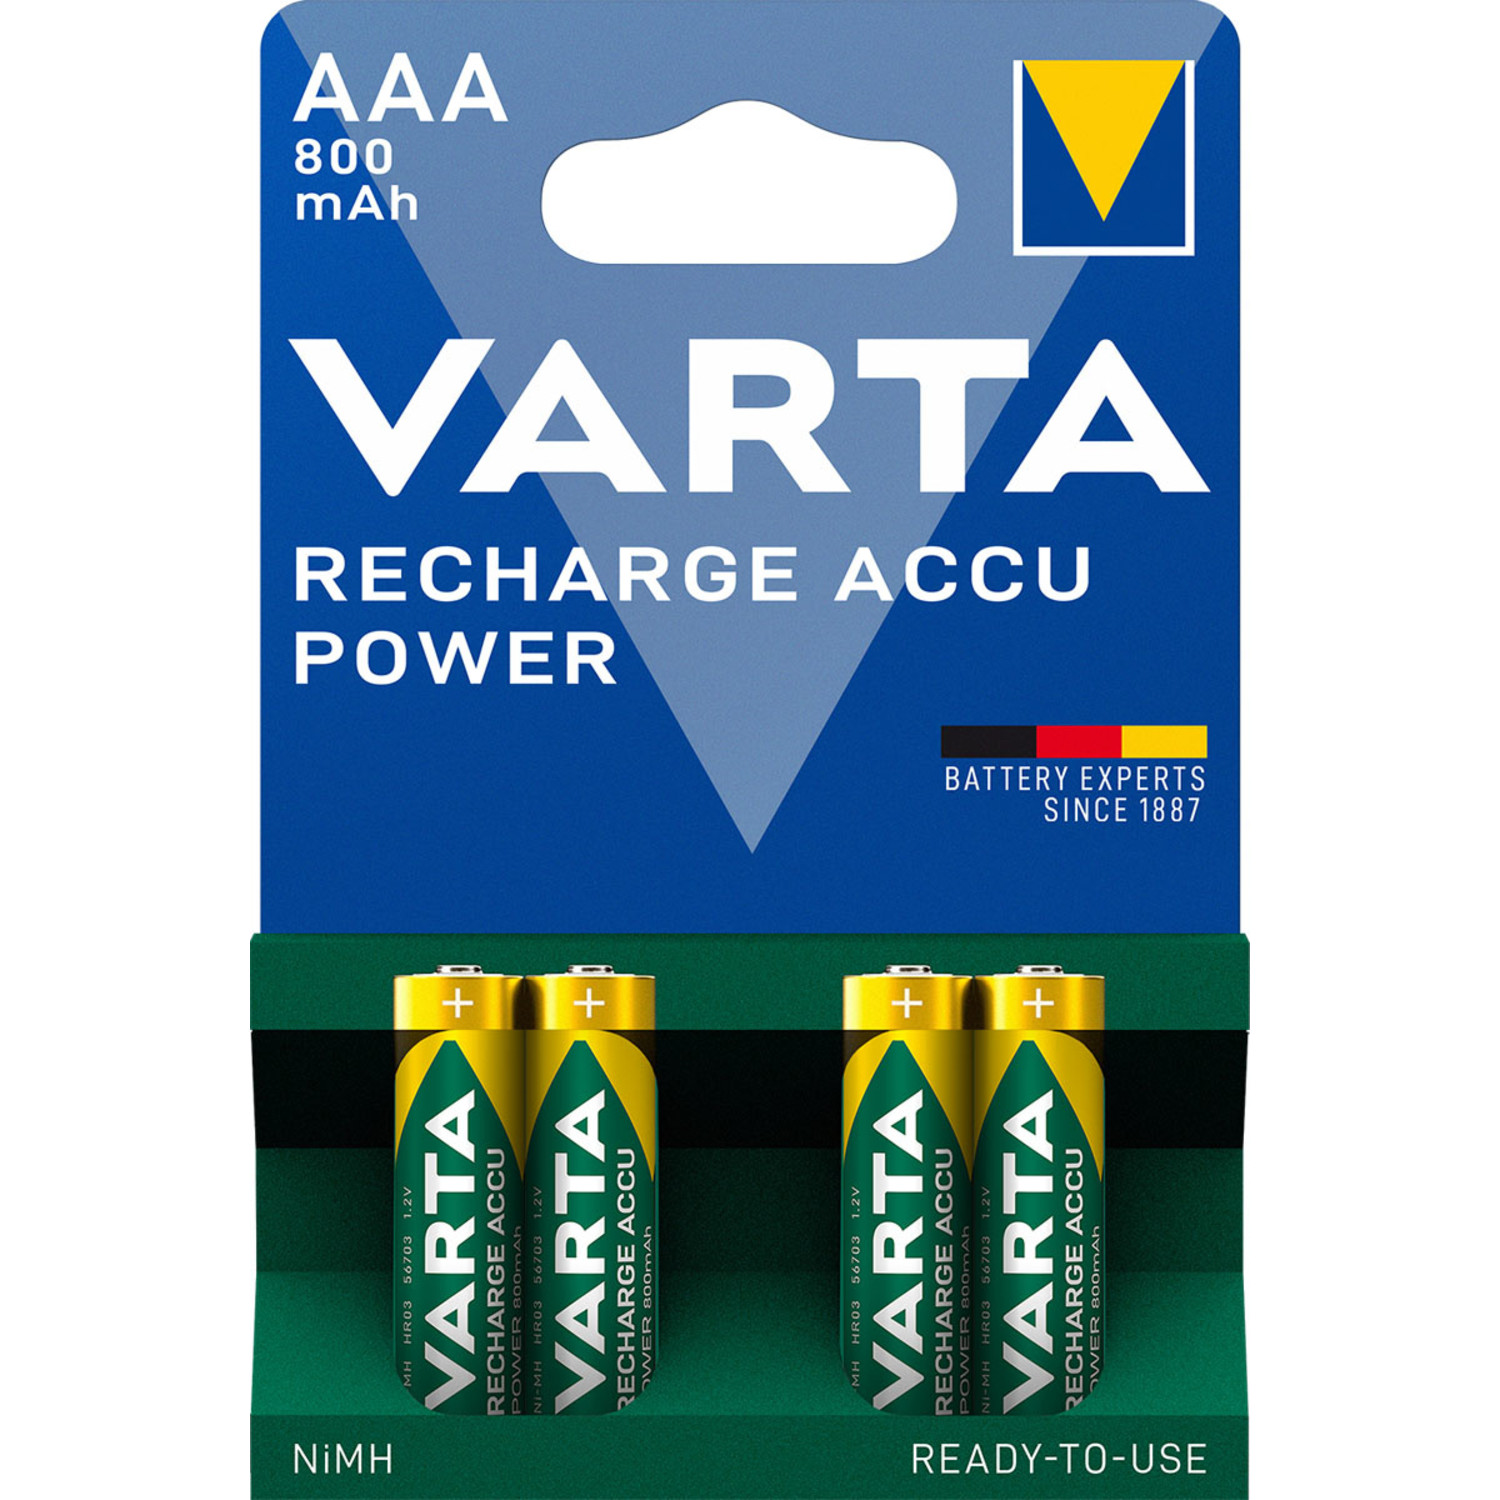 Smerig Clam Mediaan Varta AAA - oplaadbare batterijen 800mAh 4 stuks - Beterbatterij